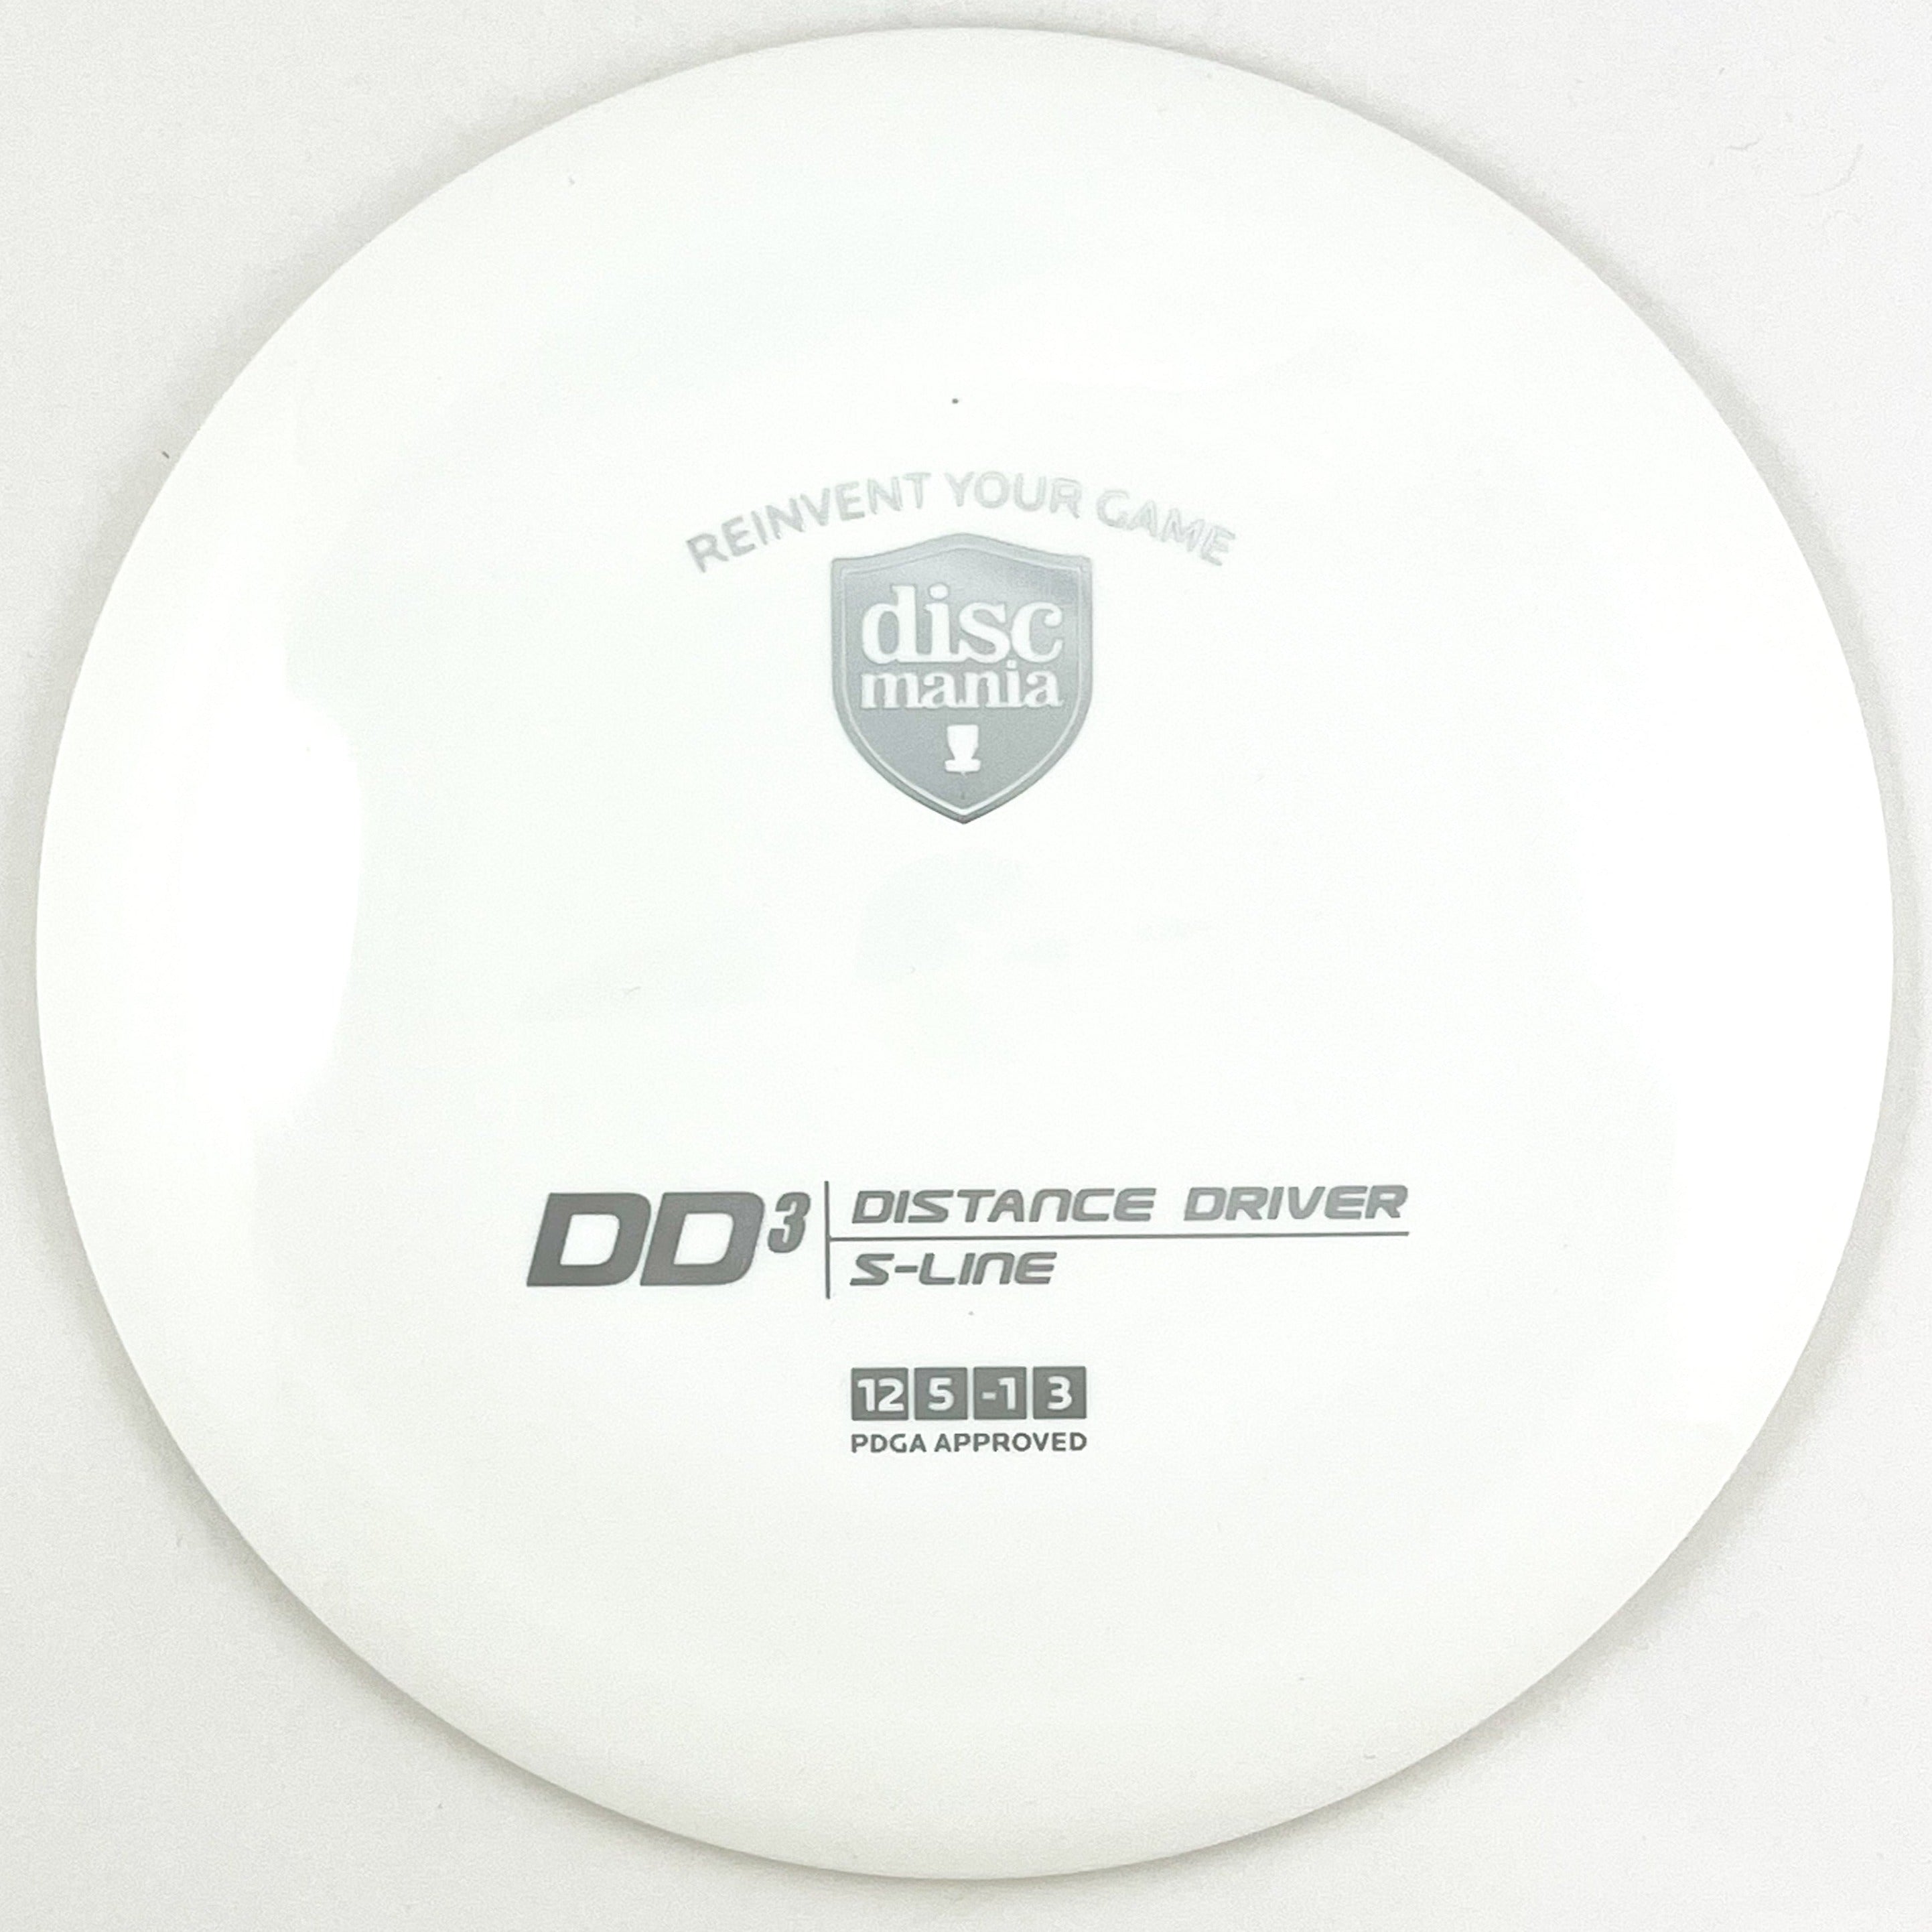 Discmania S-Line DD3 disc golf distance driver by Discmania Golf Discs.